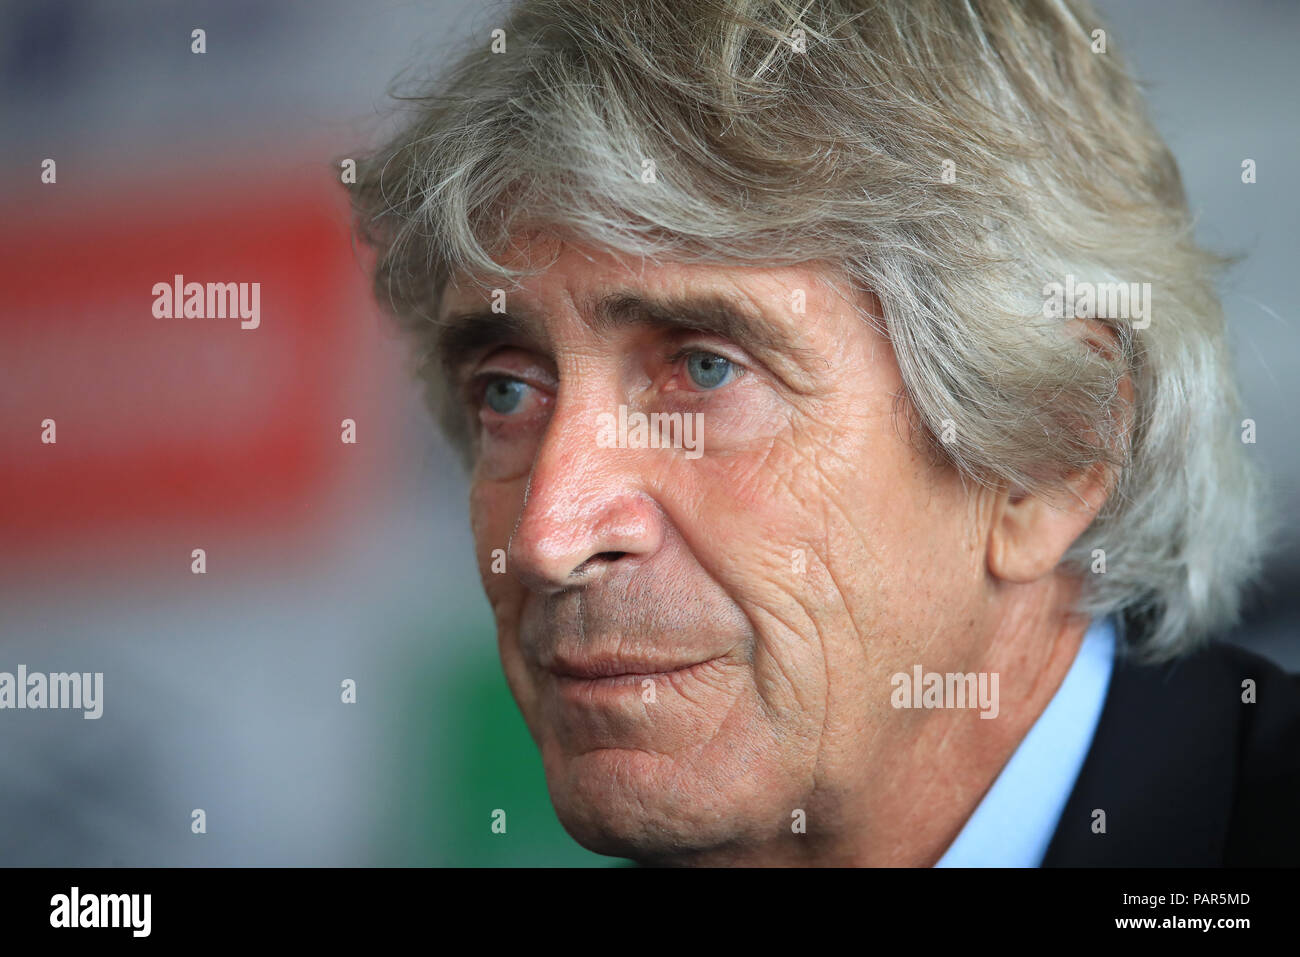 West Ham United manager Manuel Pellegrini durante una conferenza stampa presso la London Stadium, Londra. Foto Stock